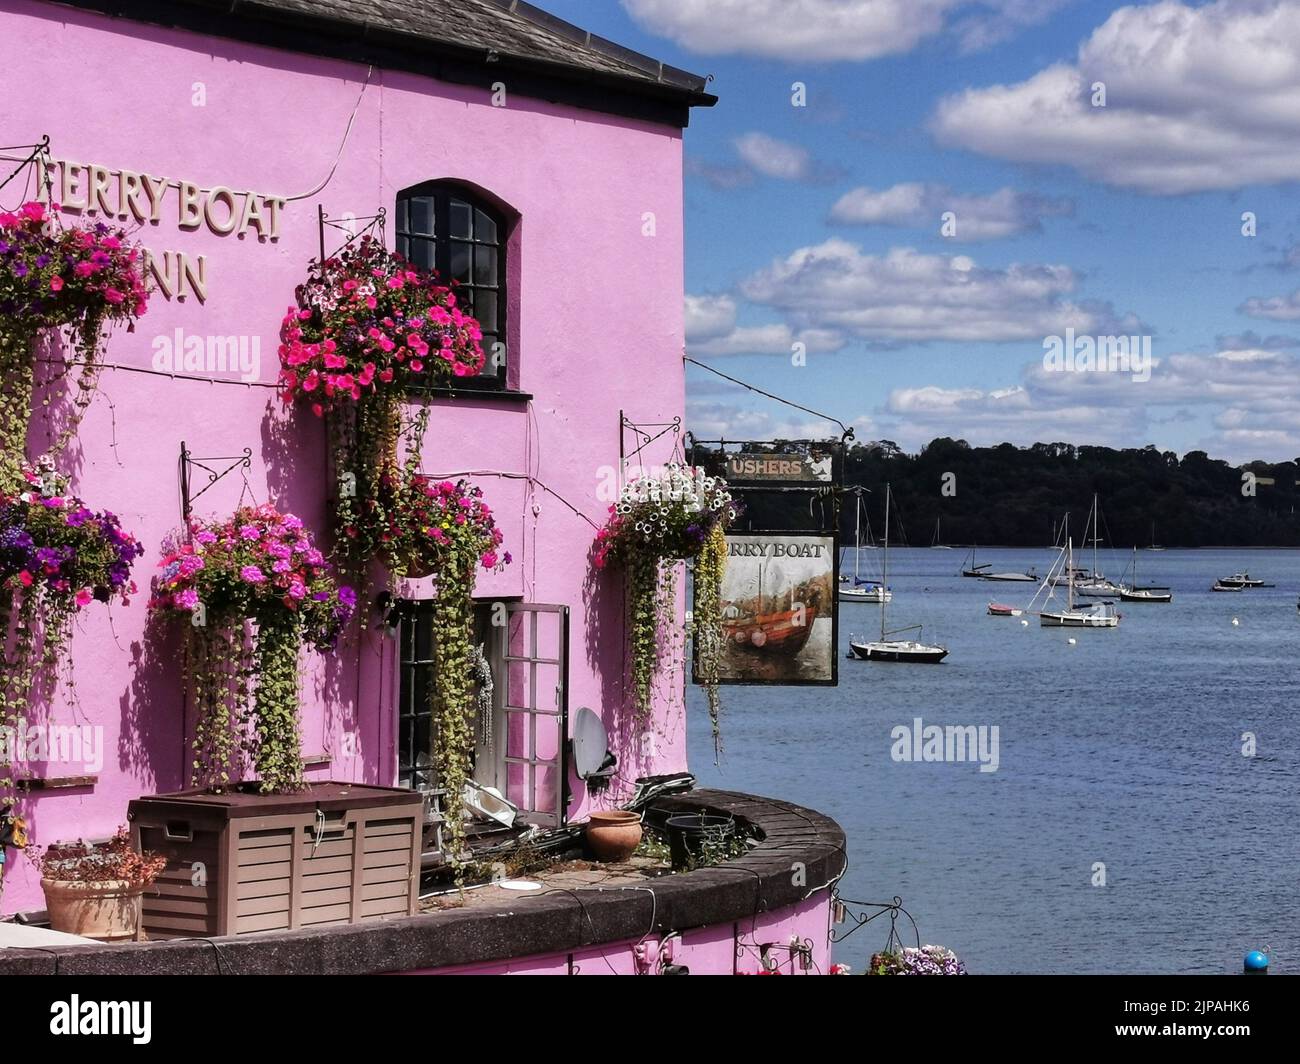 Ferry Boat Inn public house overlooking the River Dart, Devon, England, UK Stock Photo